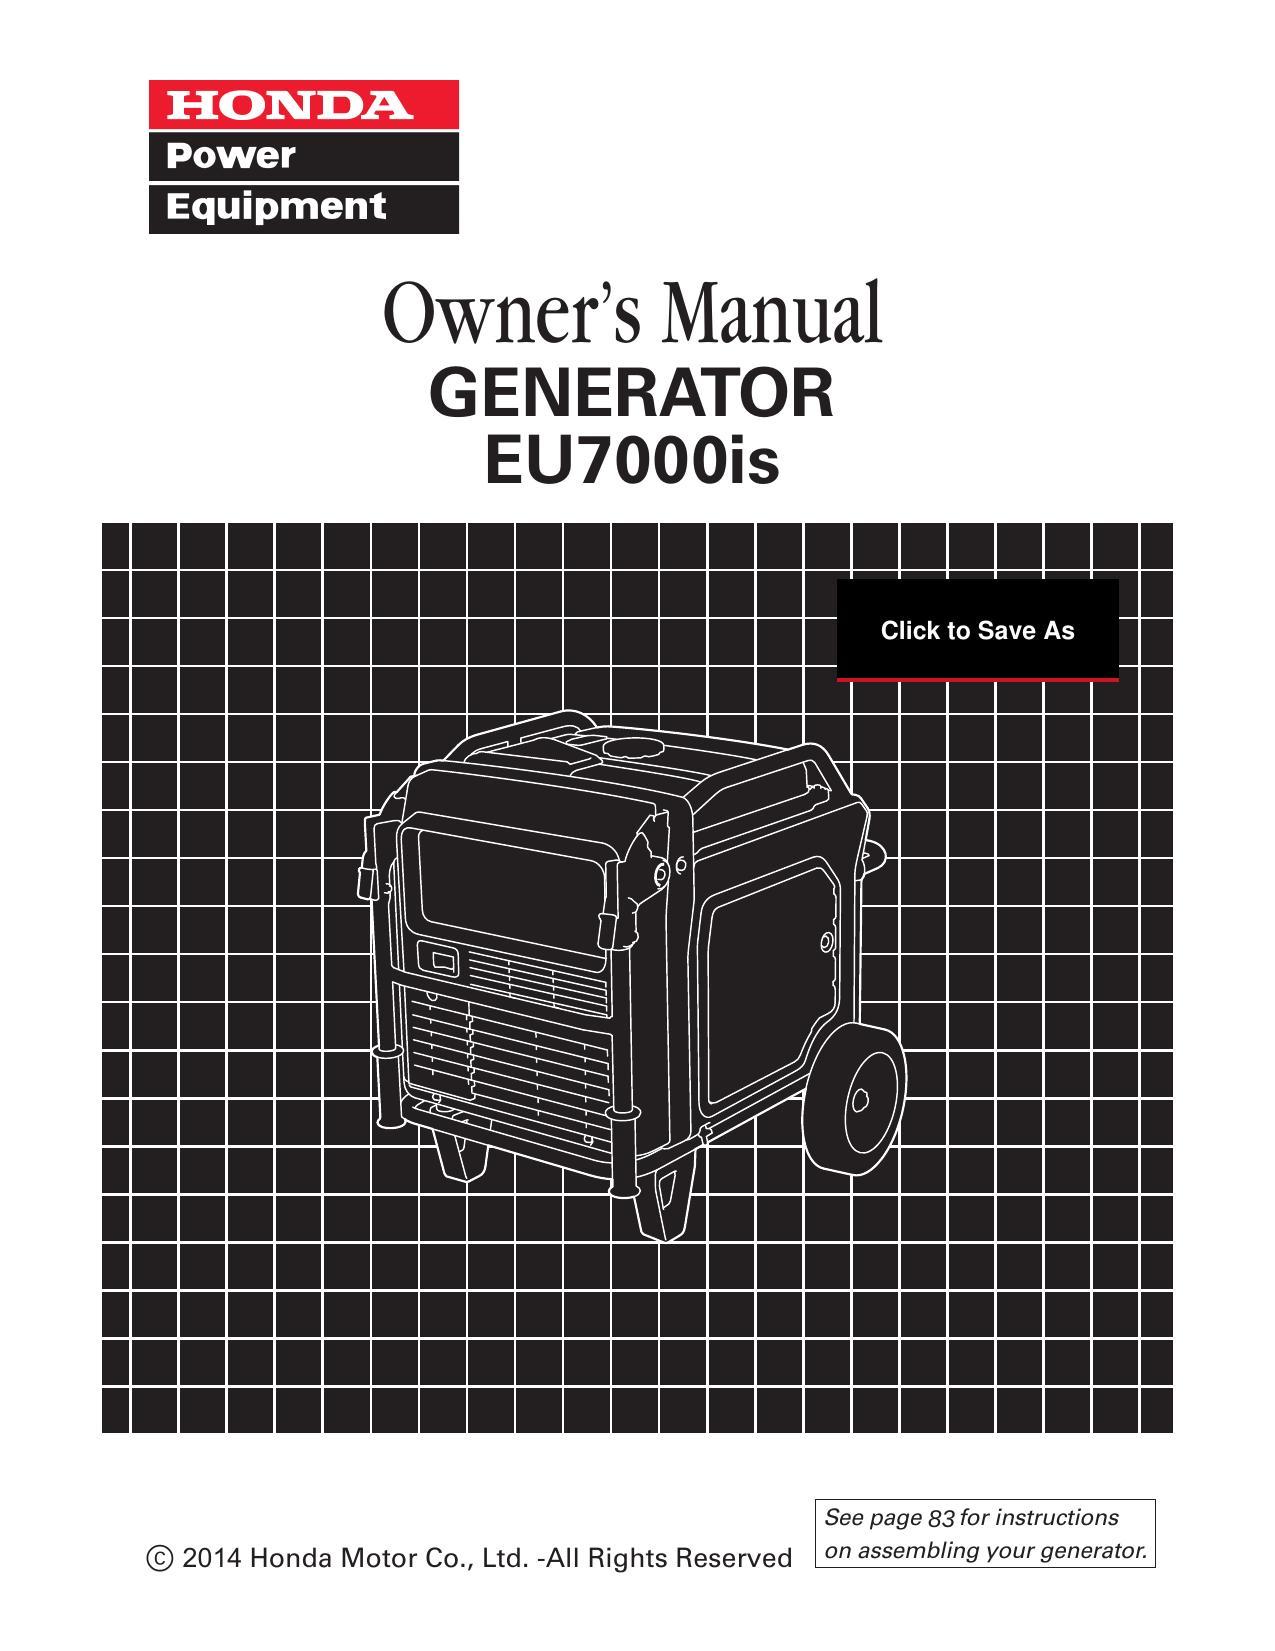 honda-power-equipment-owners-manual-generator-eu7000is.pdf